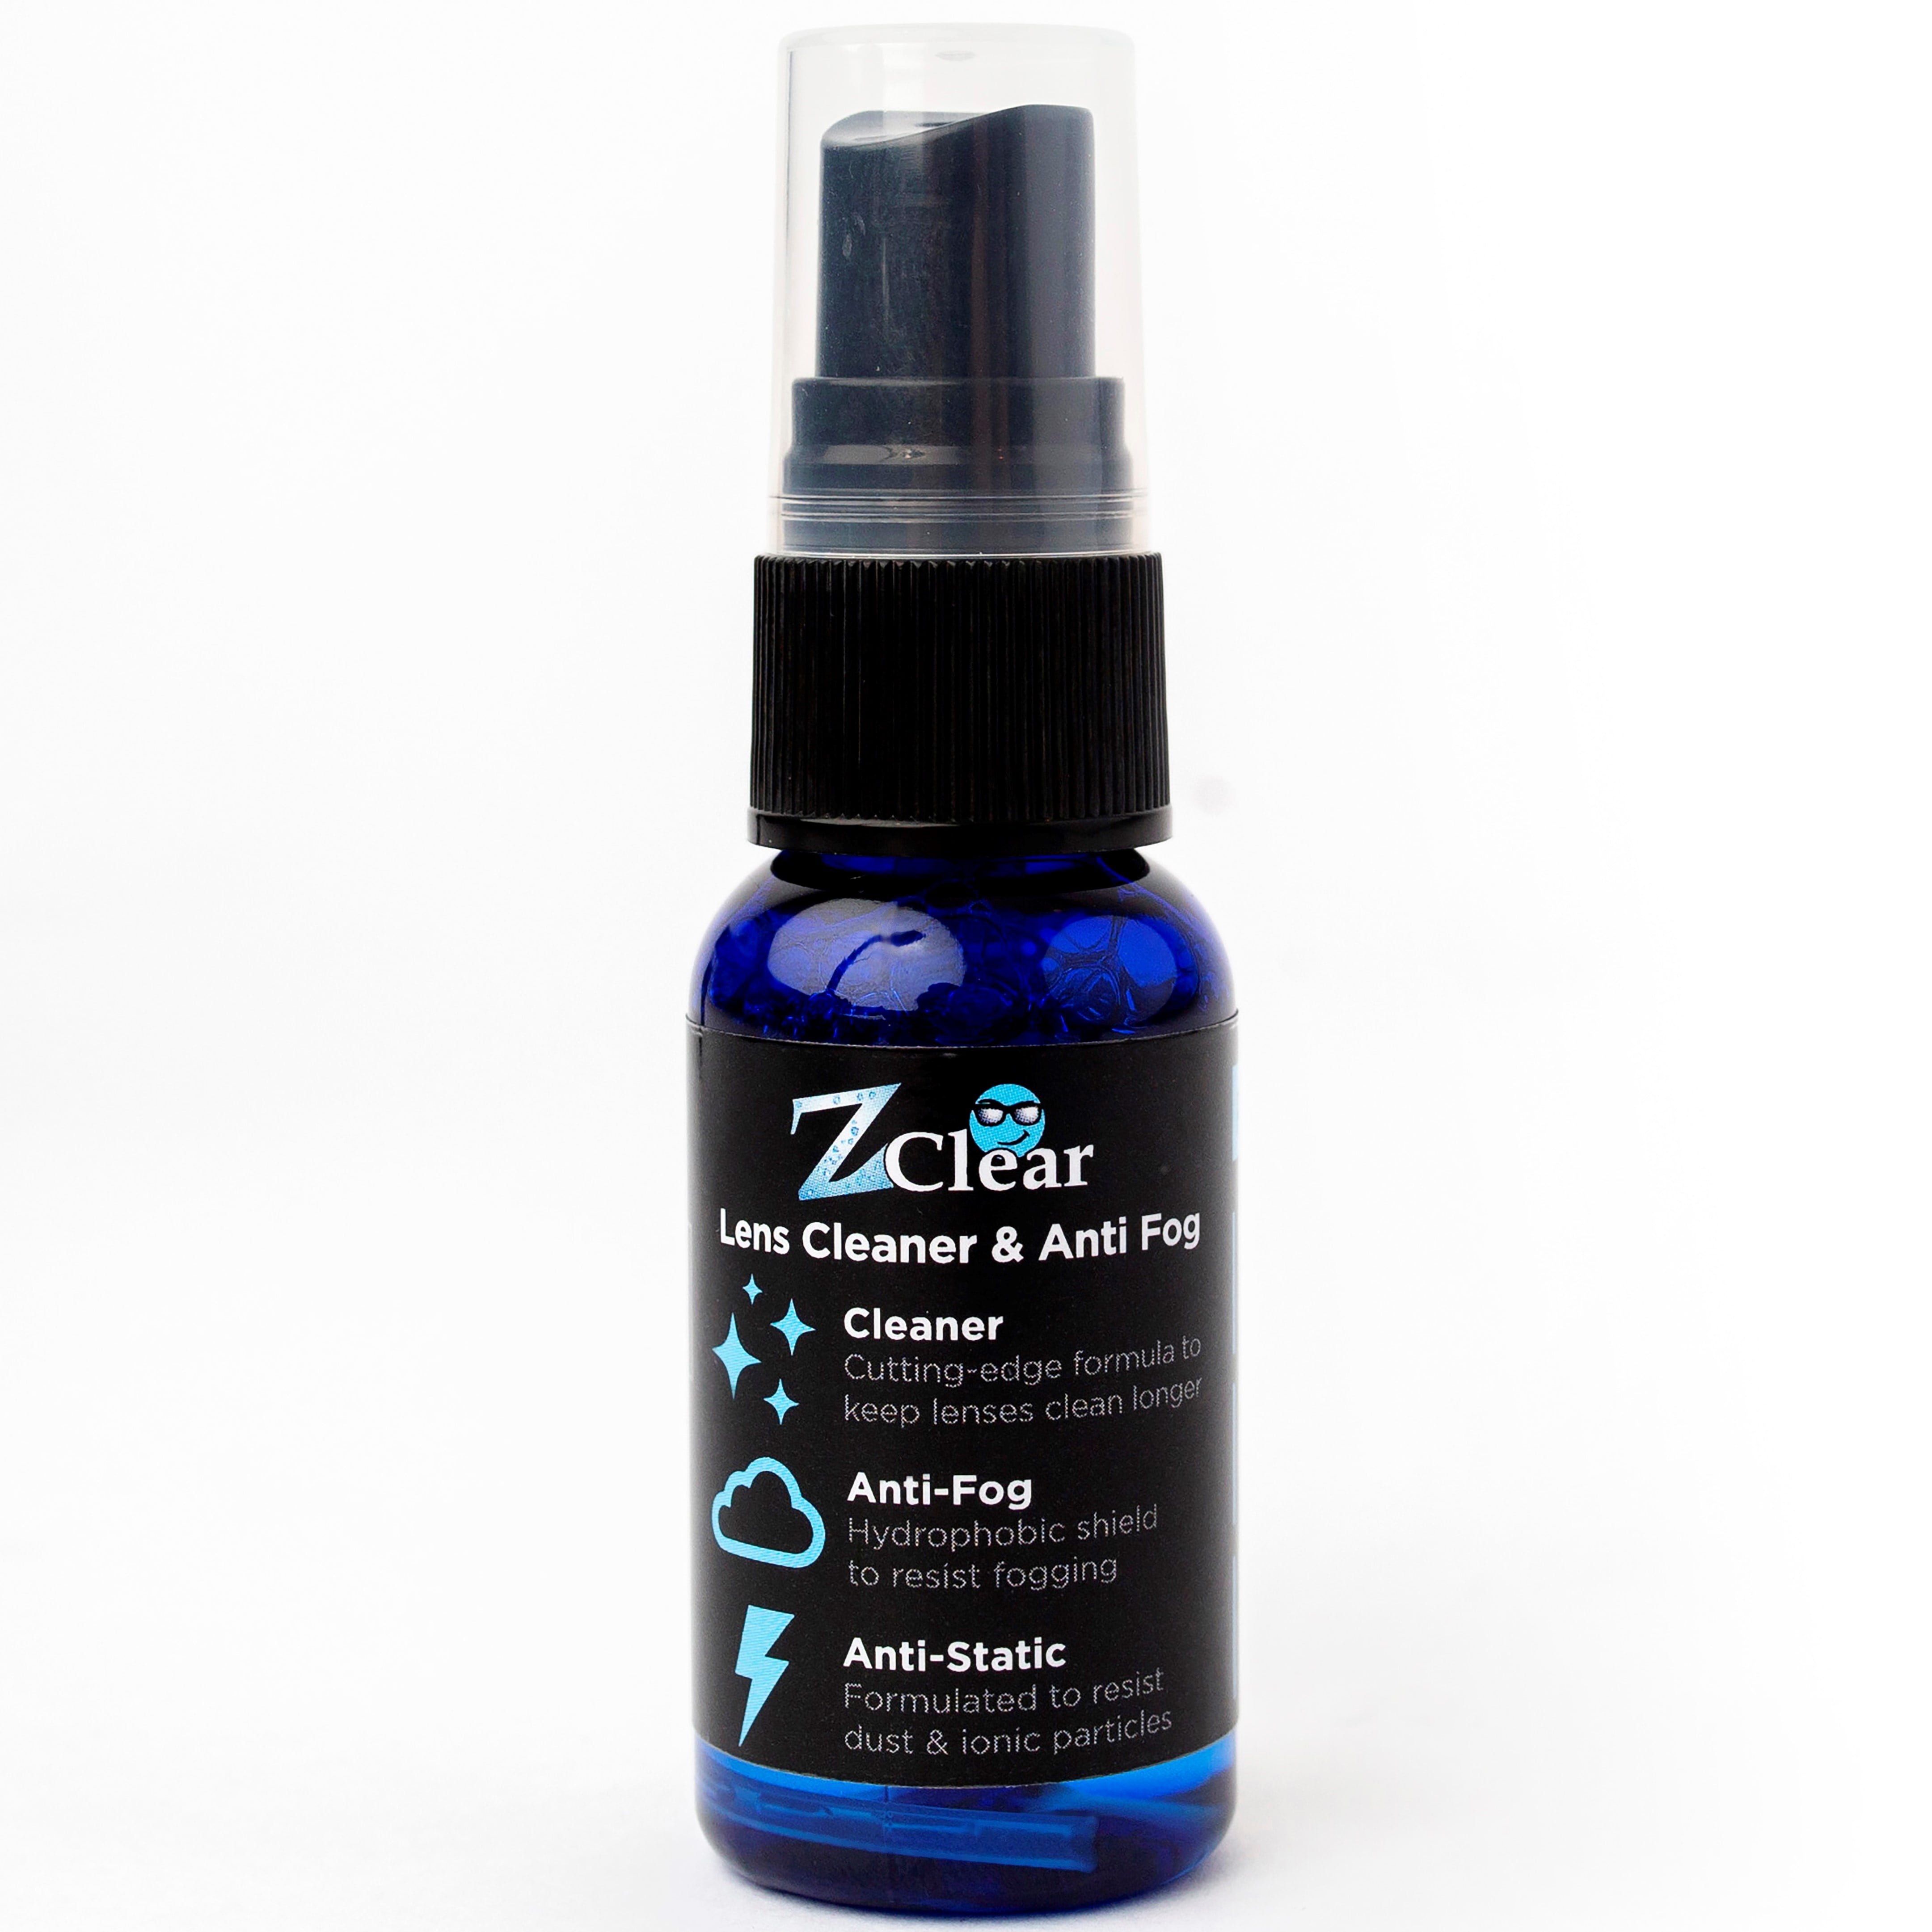 Z Clear Premium Lens Cleaner & Anti